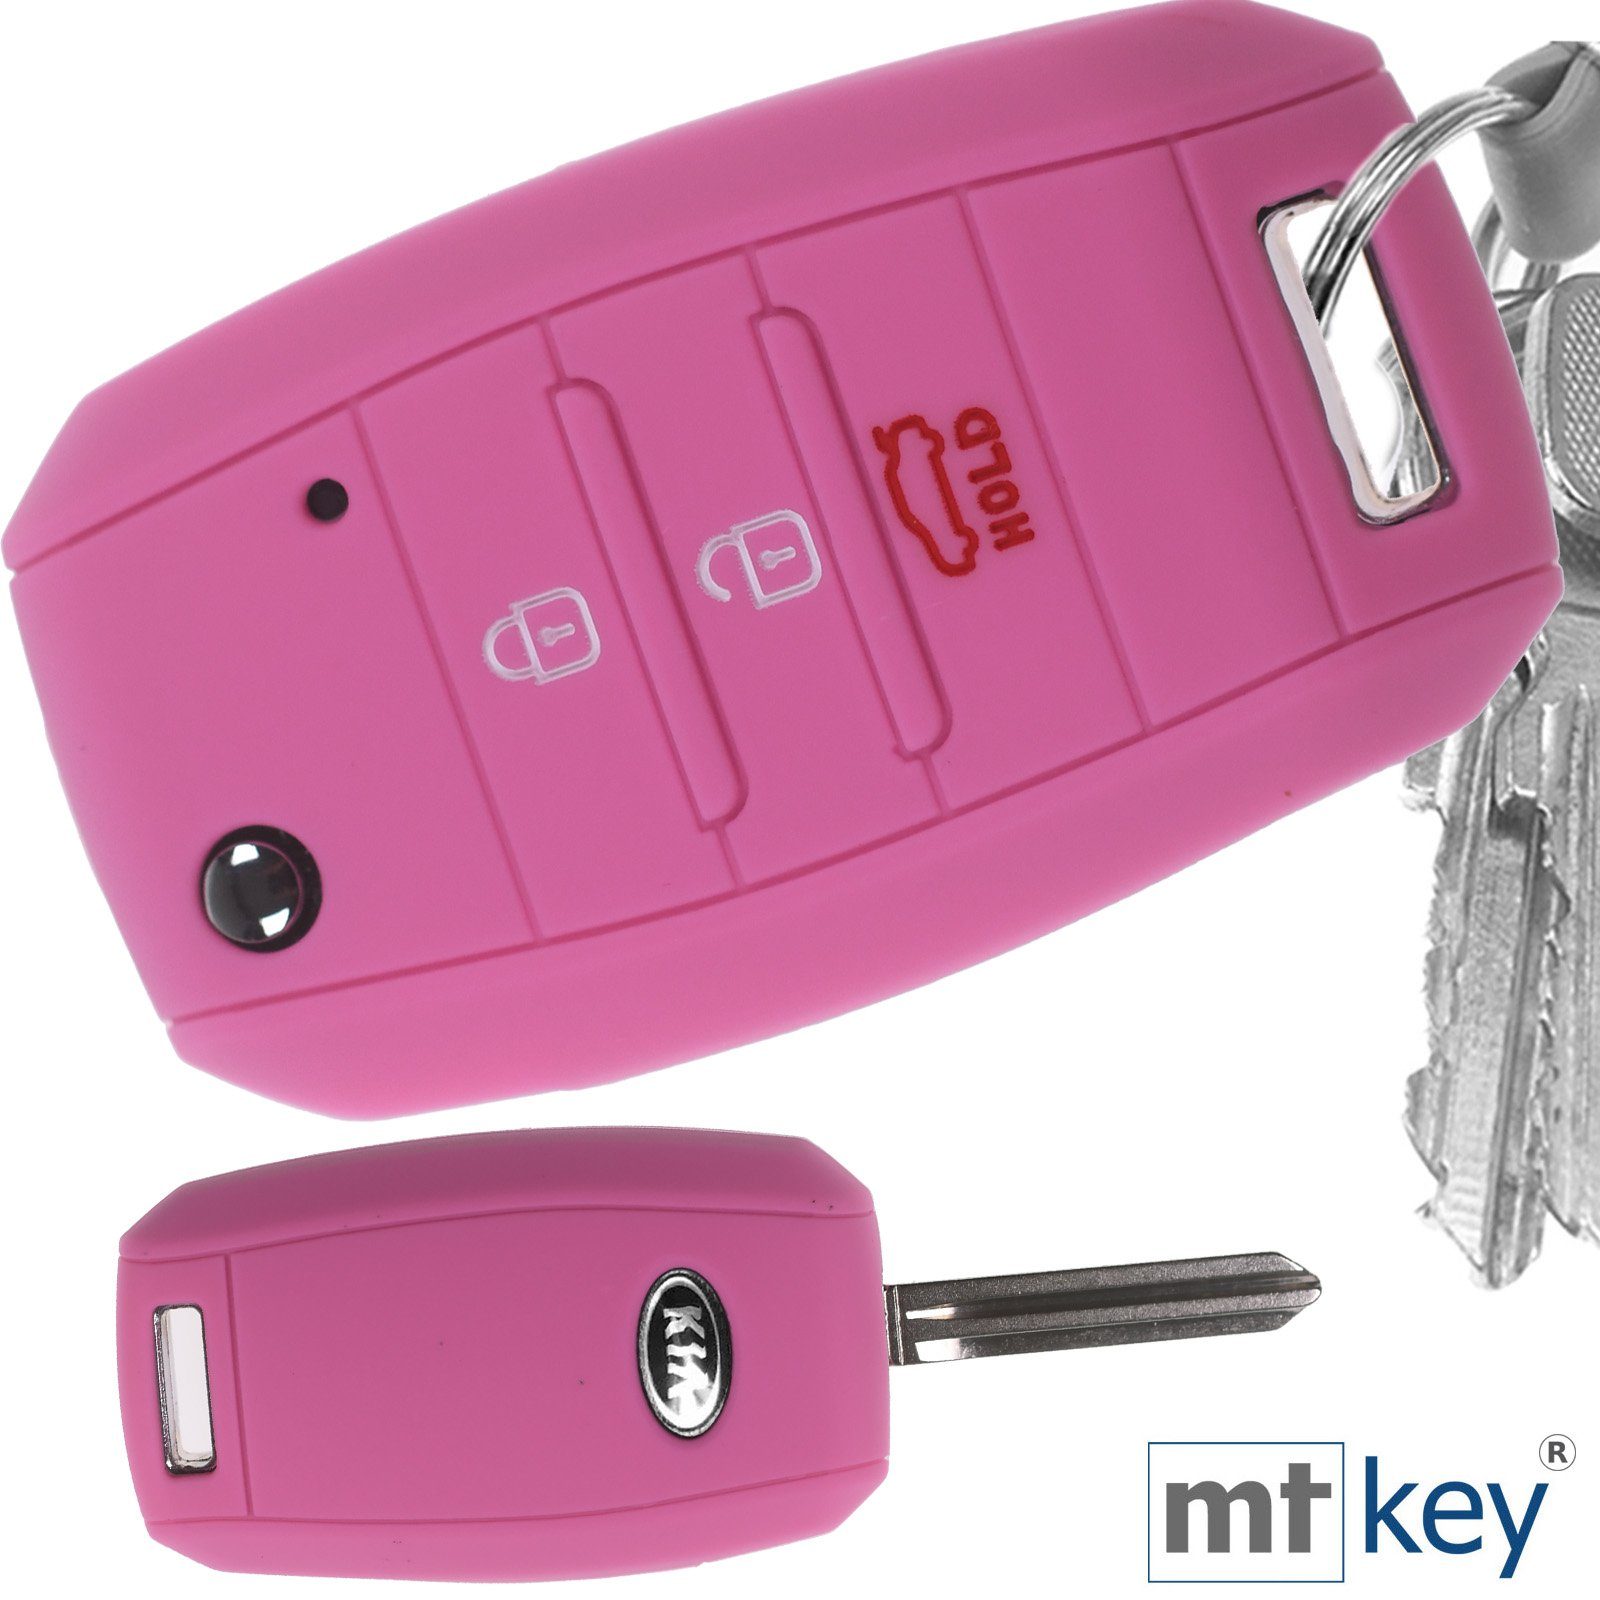 mt-key Schlüsseltasche Autoschlüssel Softcase Silikon Schutzhülle Rosa, für KIA Picantio Rio Ceed Soul Sportage Stonicens 3 Tasten Schlüssel